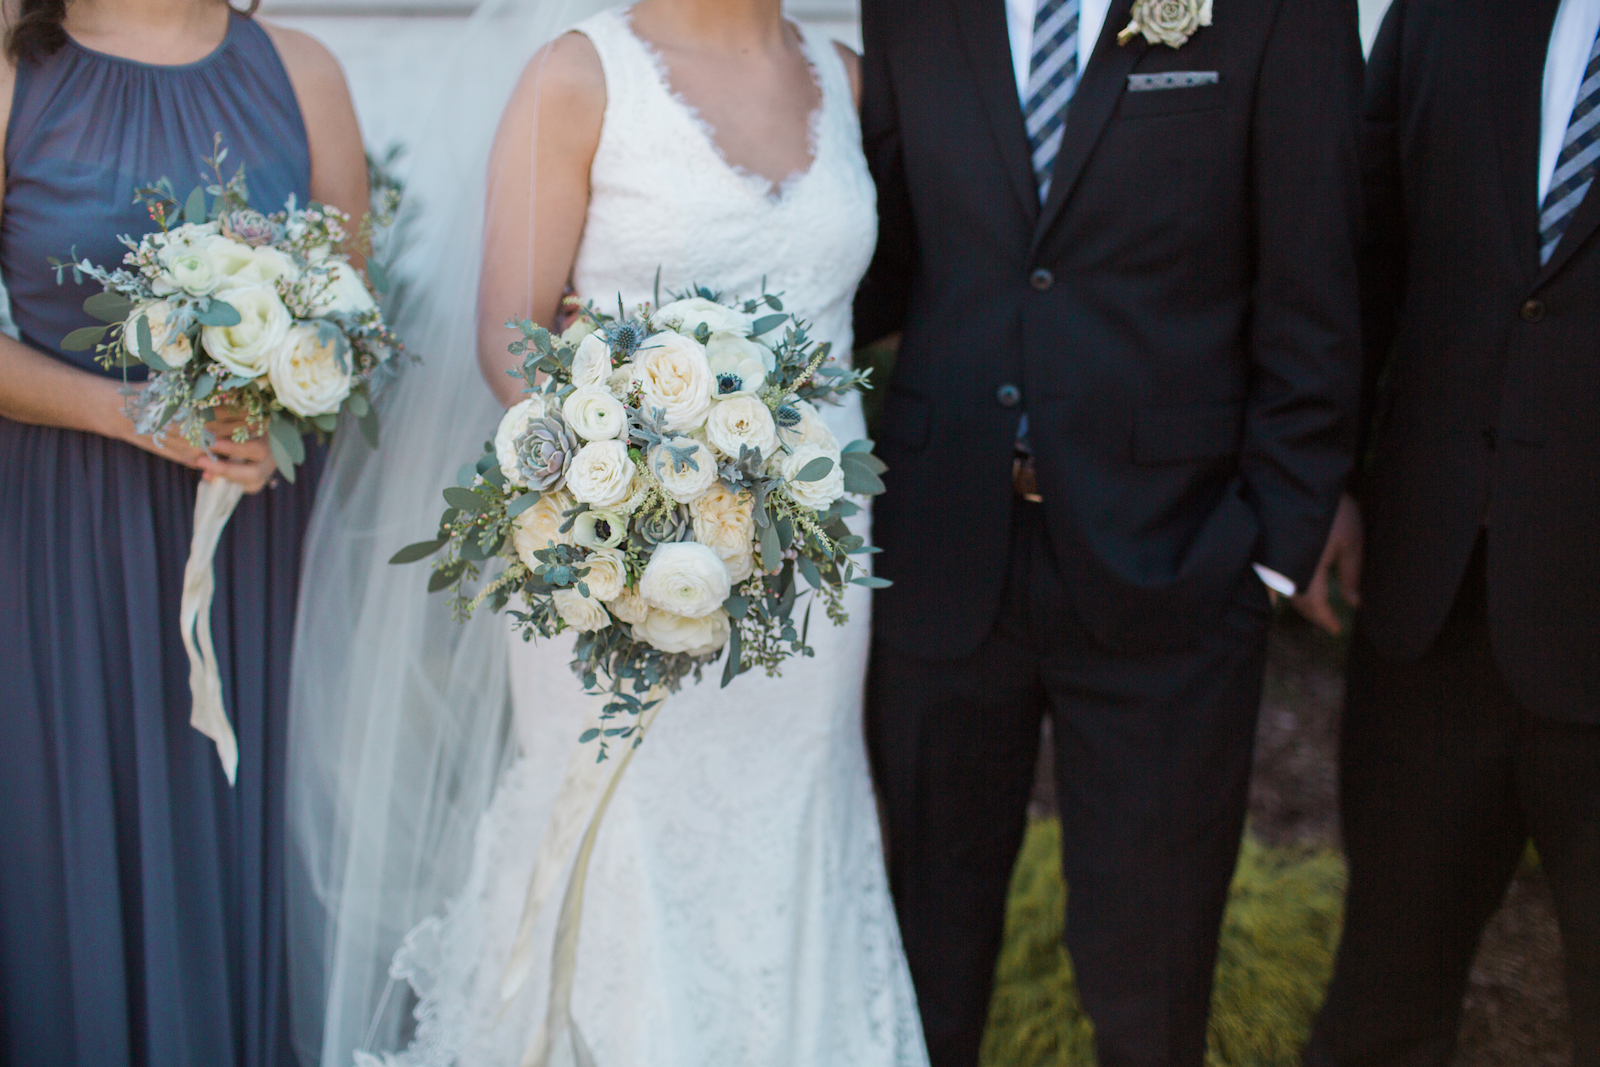 Lush winter wedding bouquet with white florals and anemones // Nashville Florist